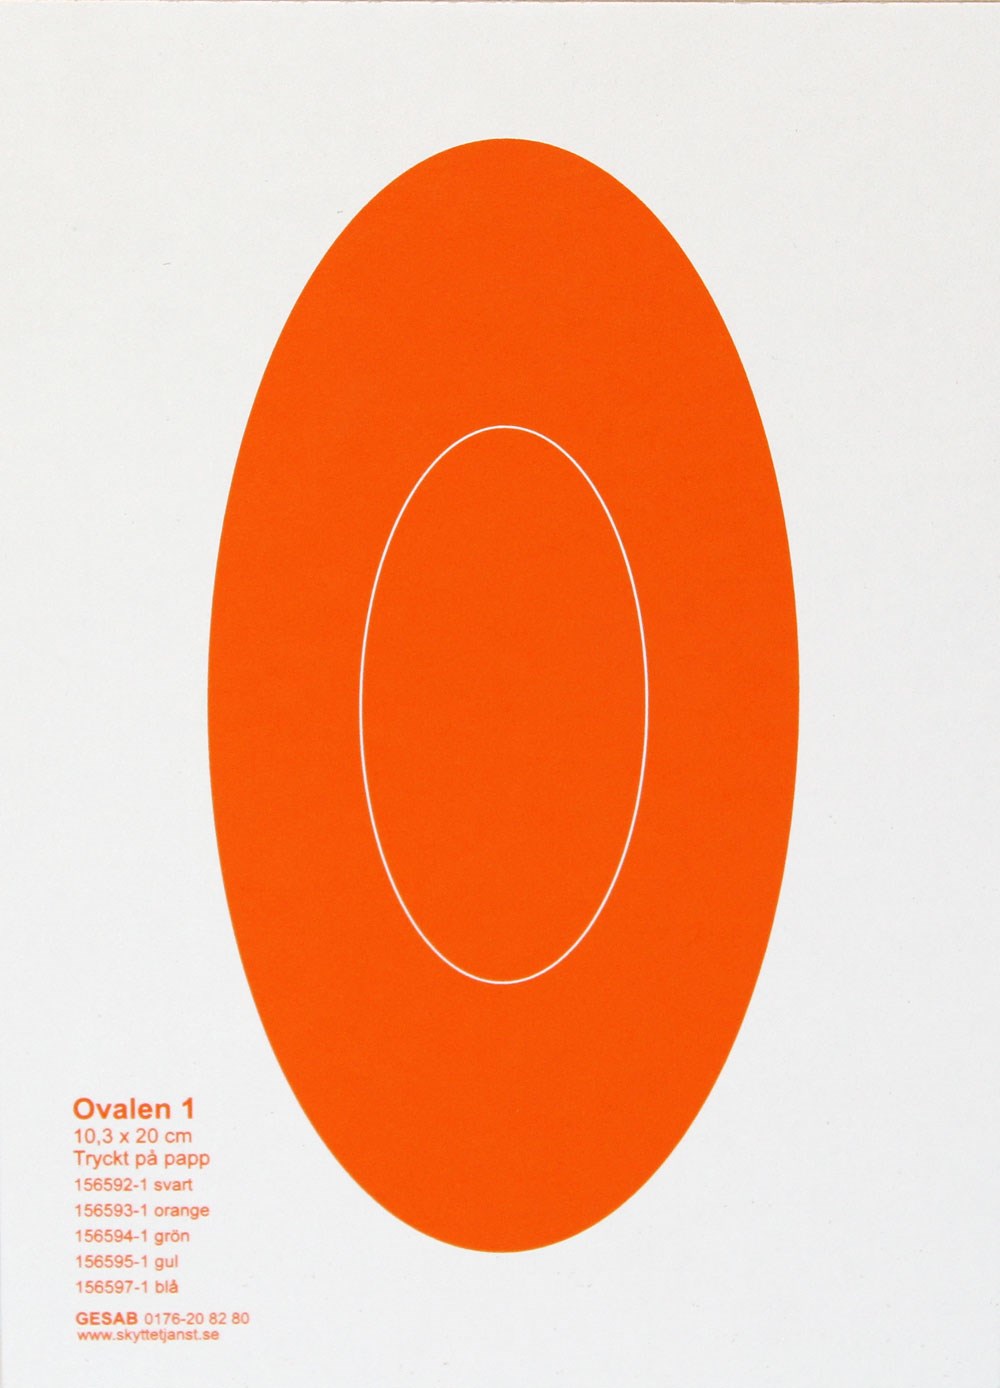 Ovalen nr 1 orange, 10,4 x 20 cm